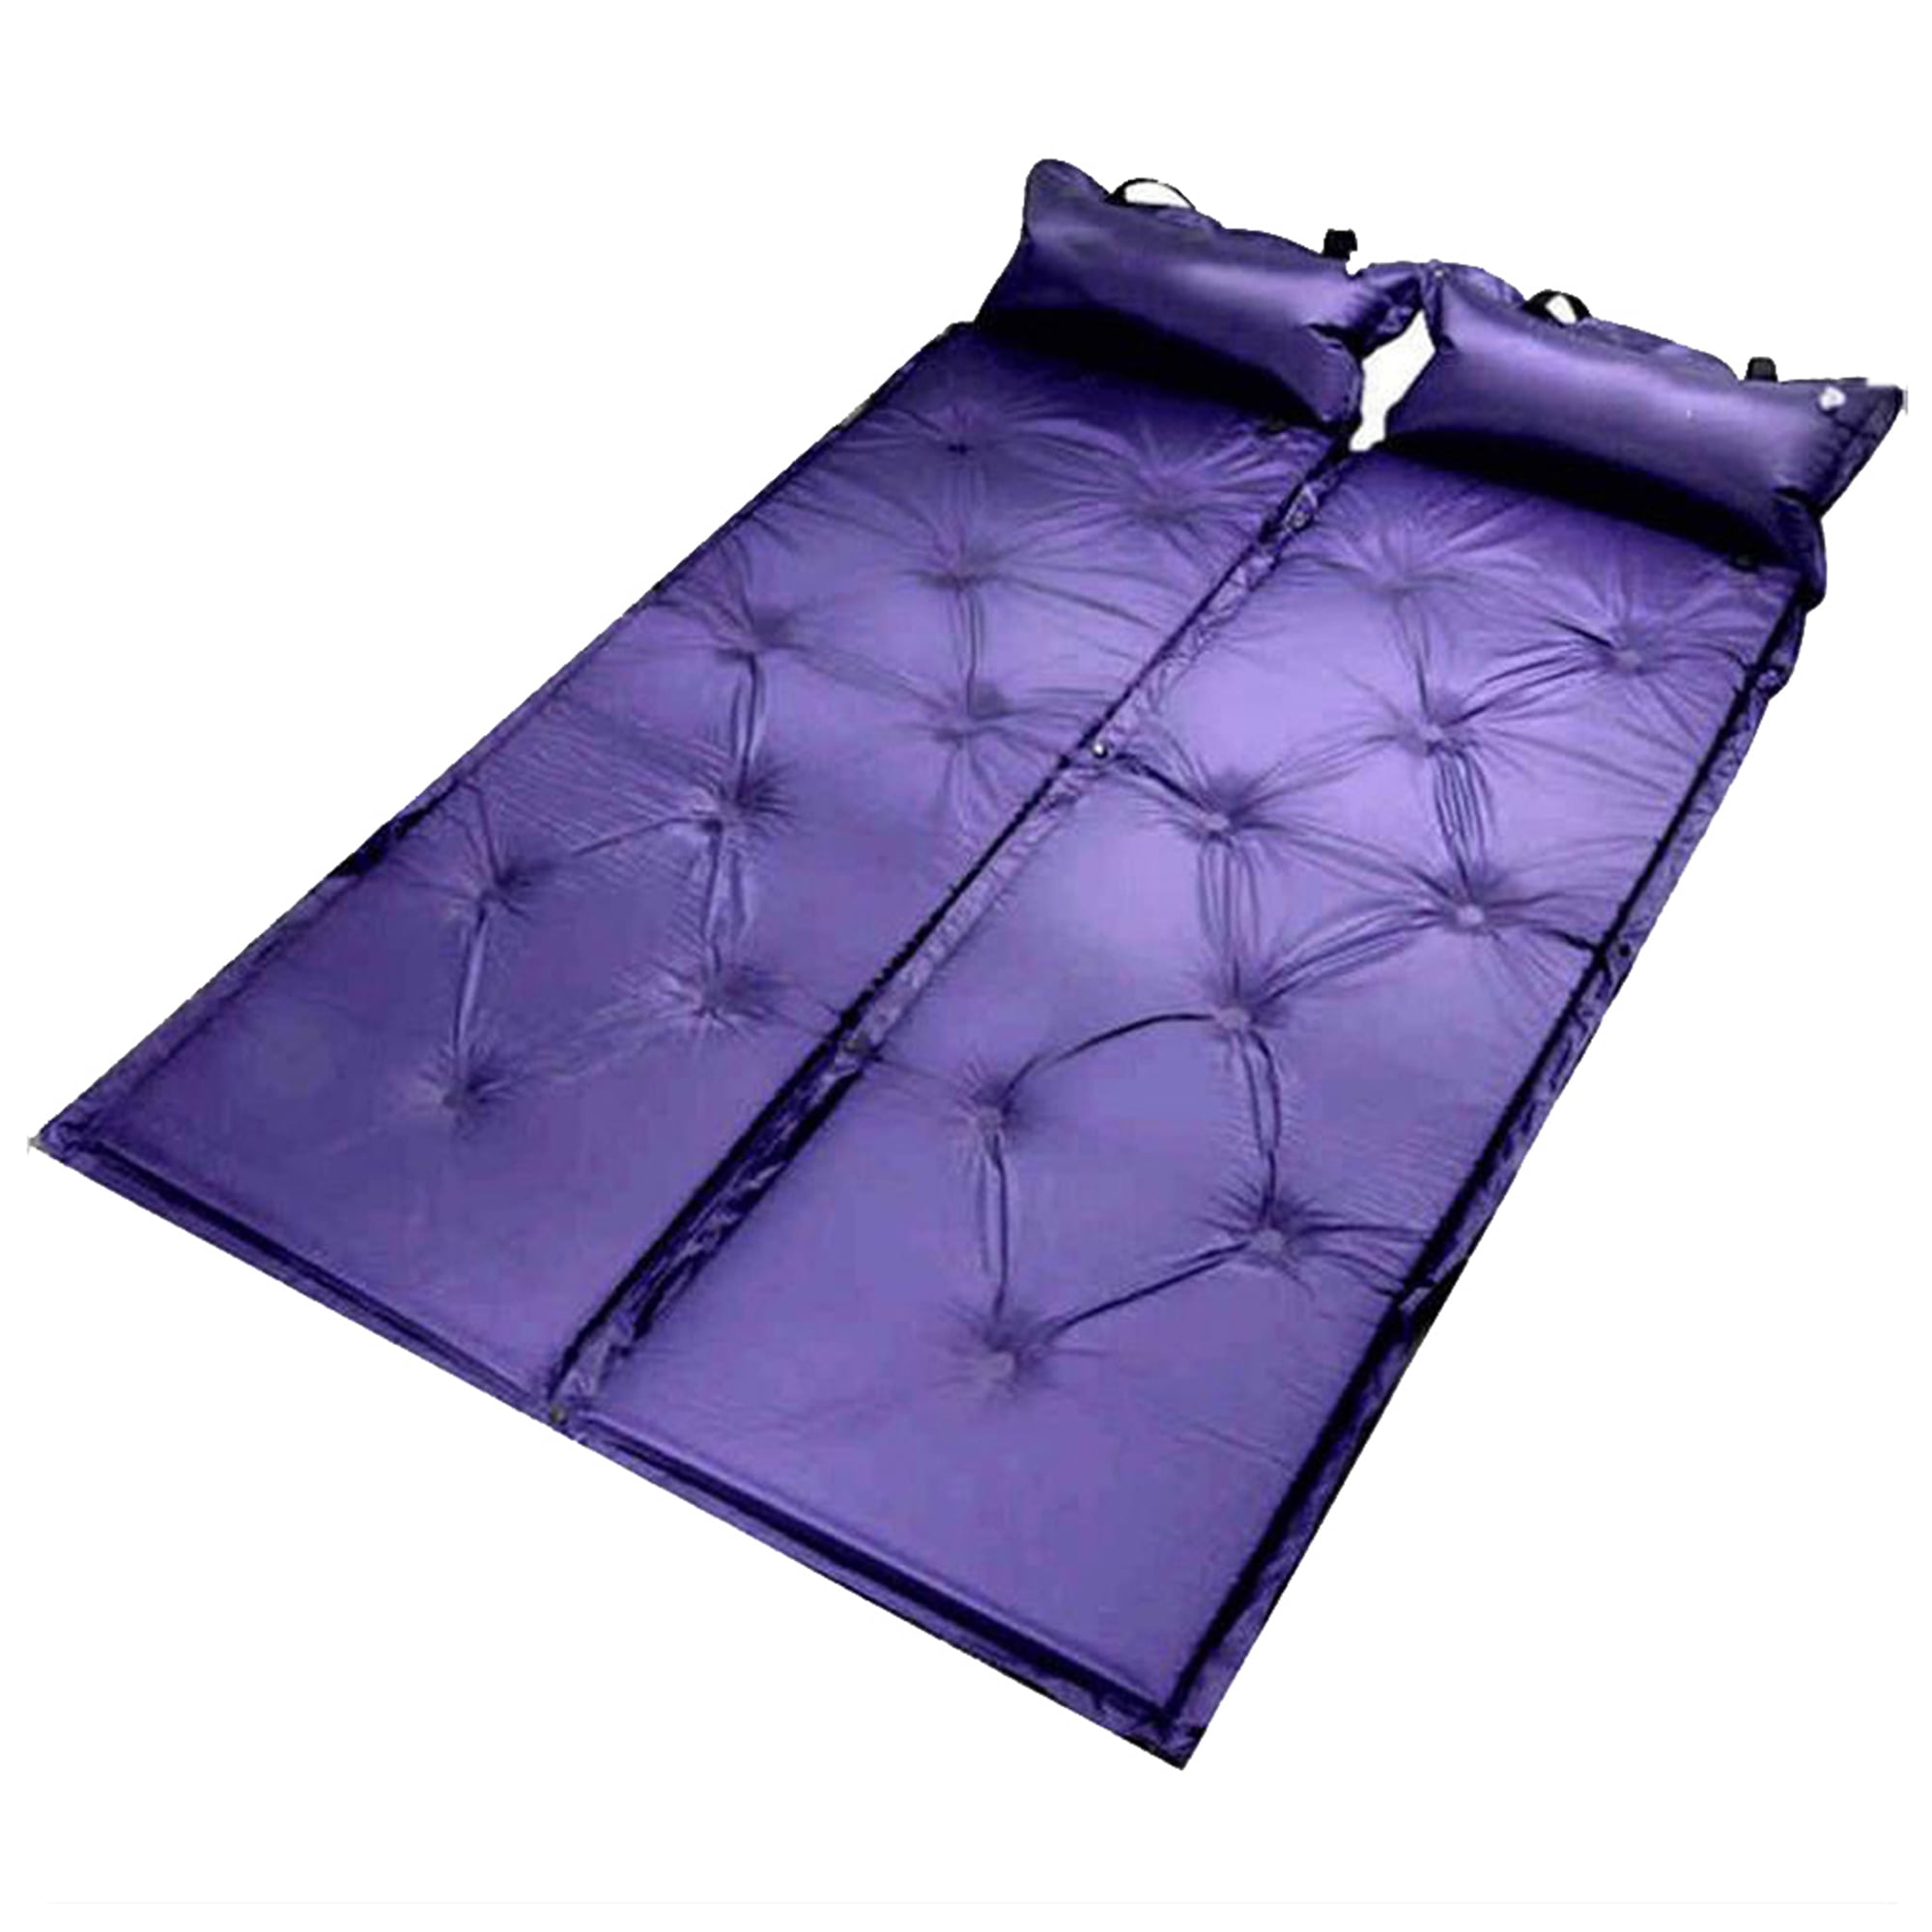 Self Inflating Mat Outdoor Tent Sleeping Pad Hiking Air Mattress Camping Bed New 